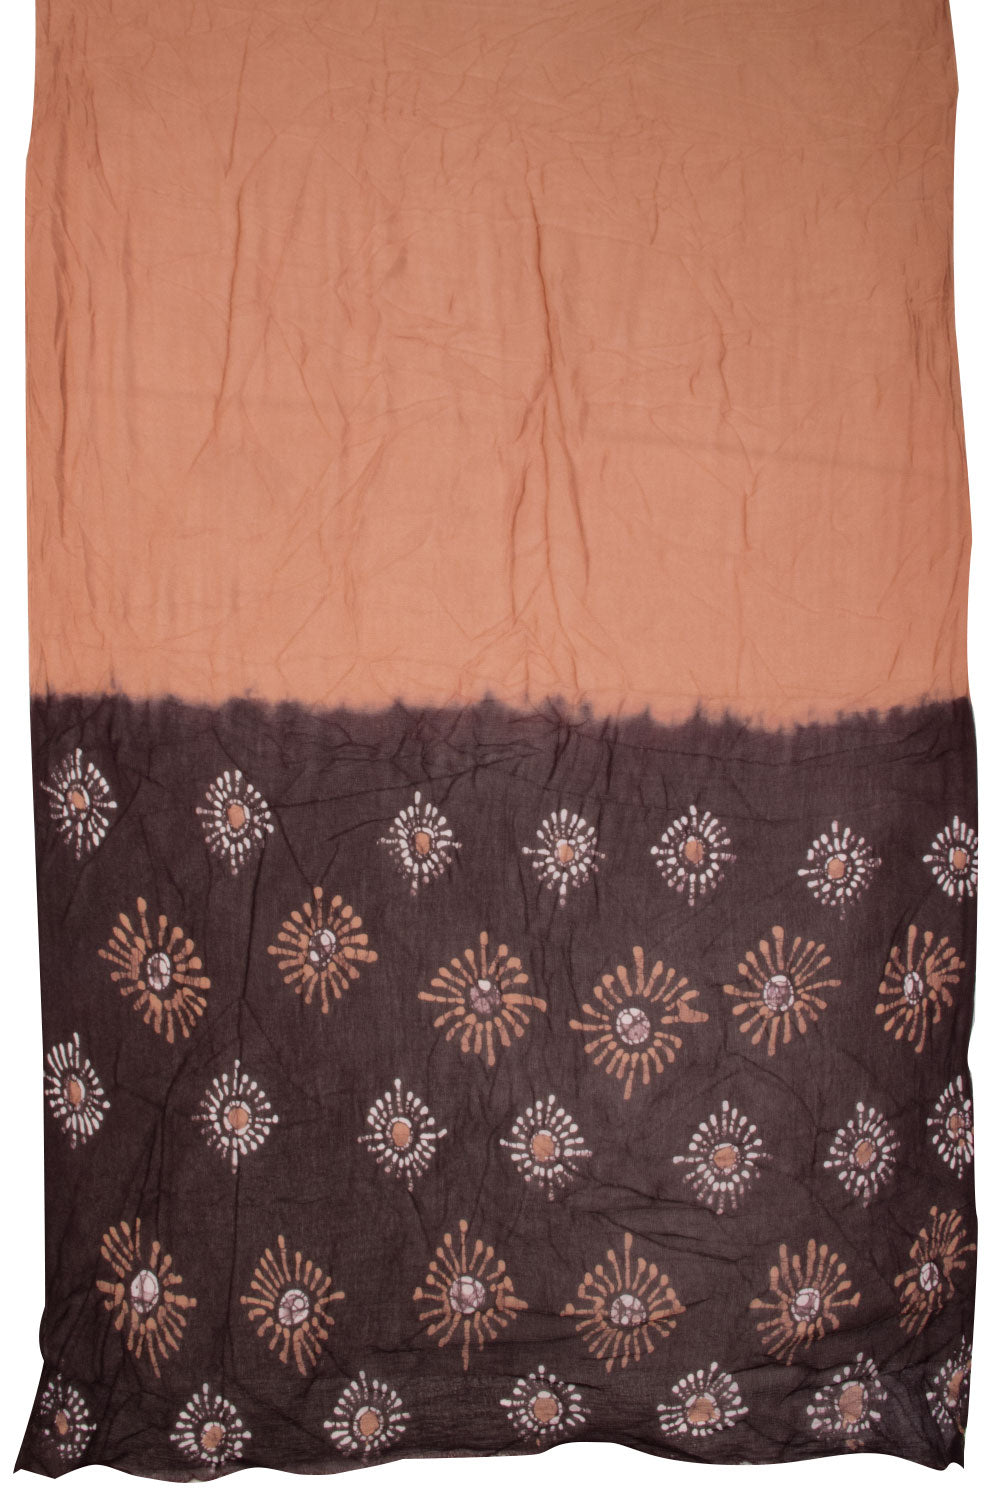 Chocolate Brown Batik Cotton 3-Piece Salwar Suit Material -Avishya